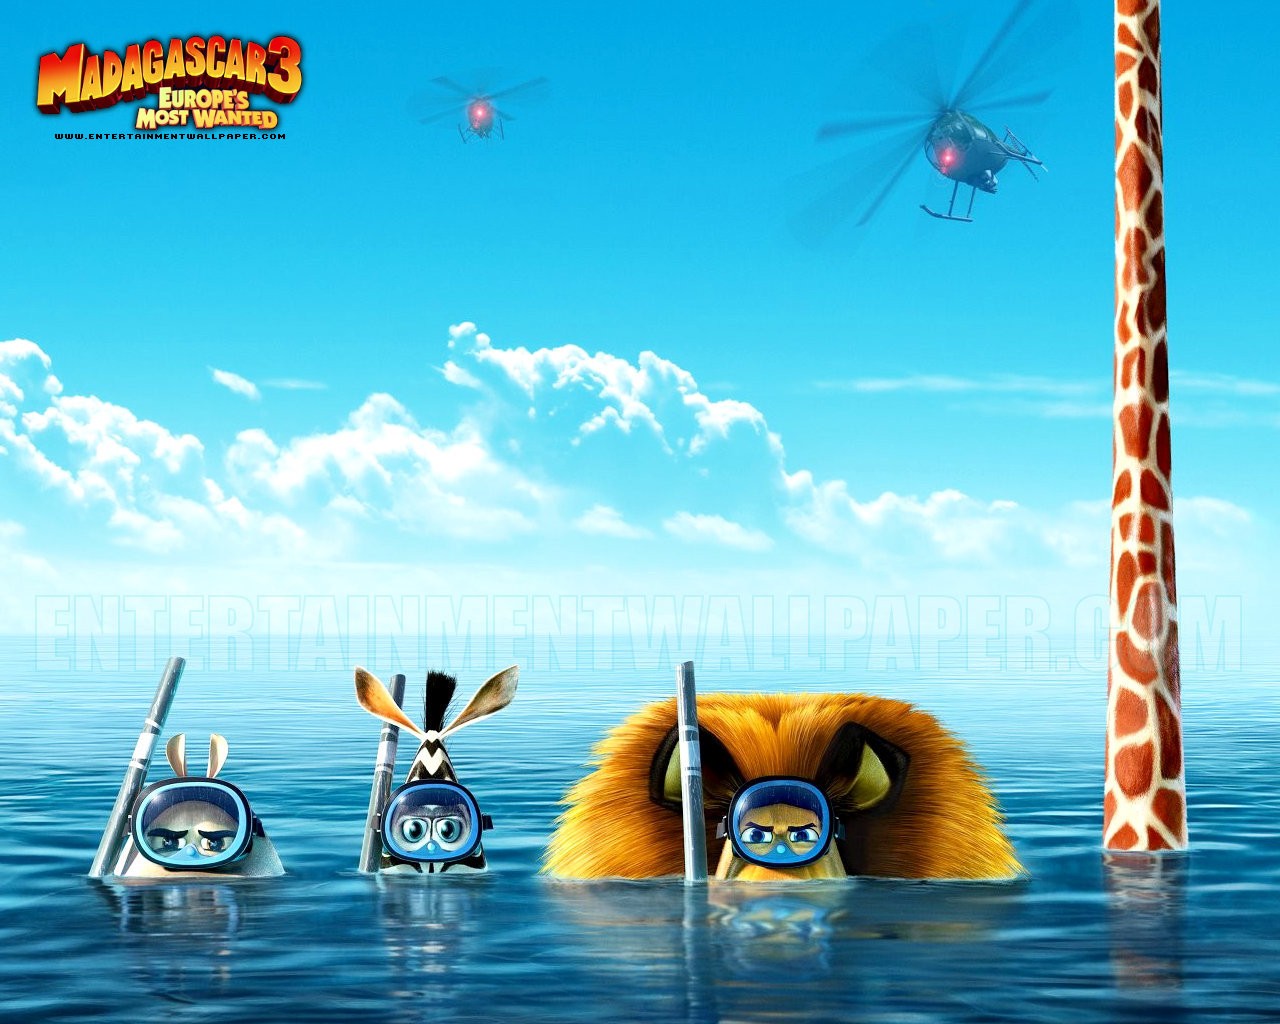 Disney Desktop Wallpaper: Madagascar 3 Wallpaper